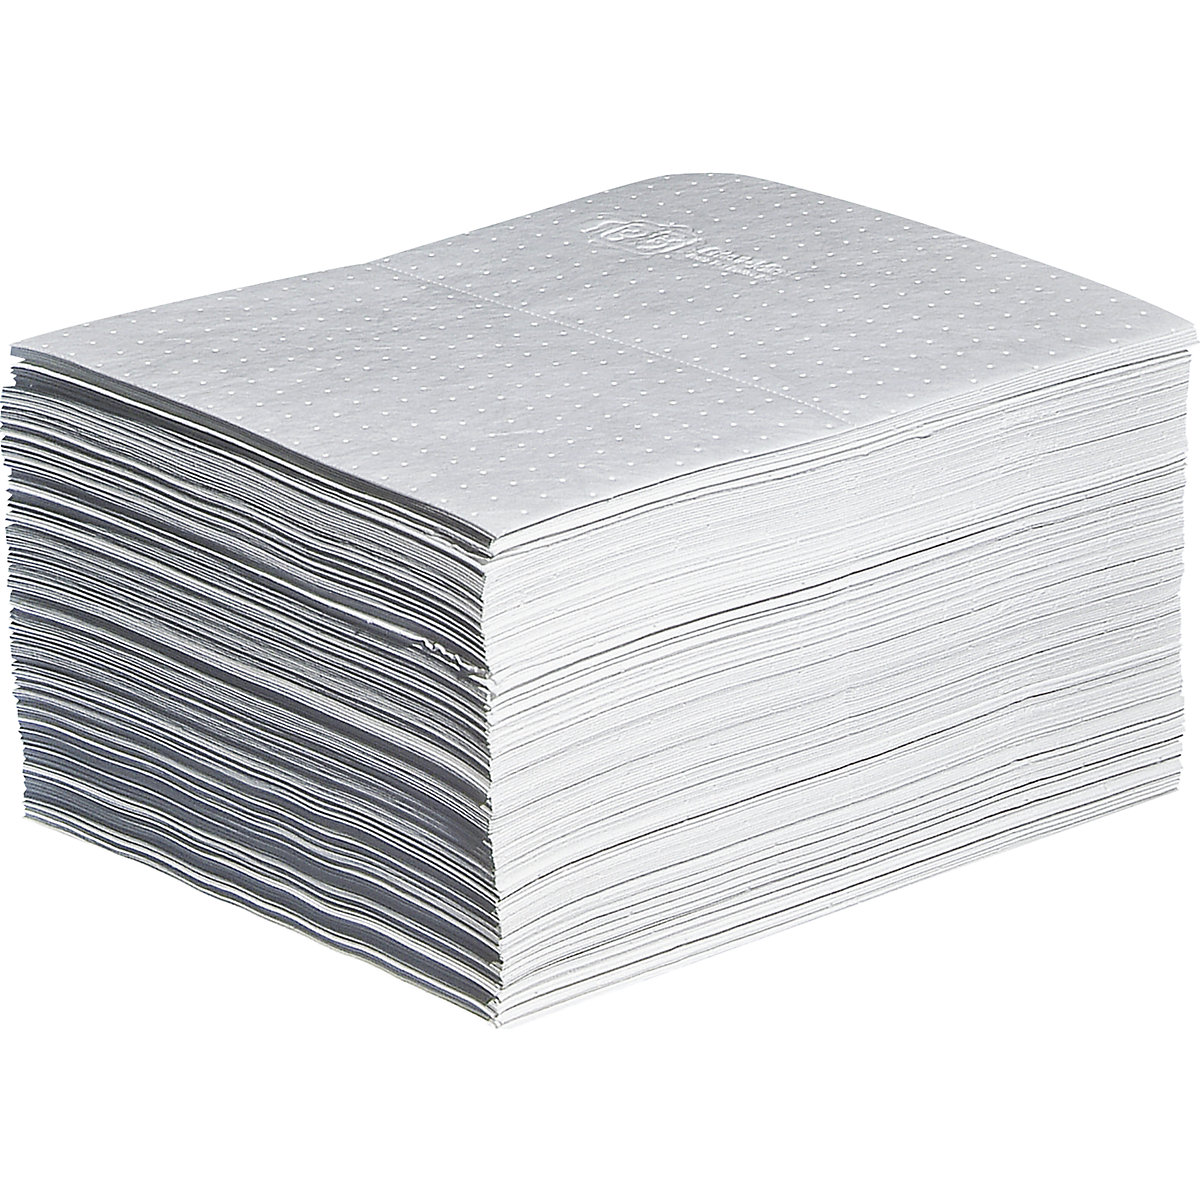 STAT-MAT® absorbent sheeting mat - PIG